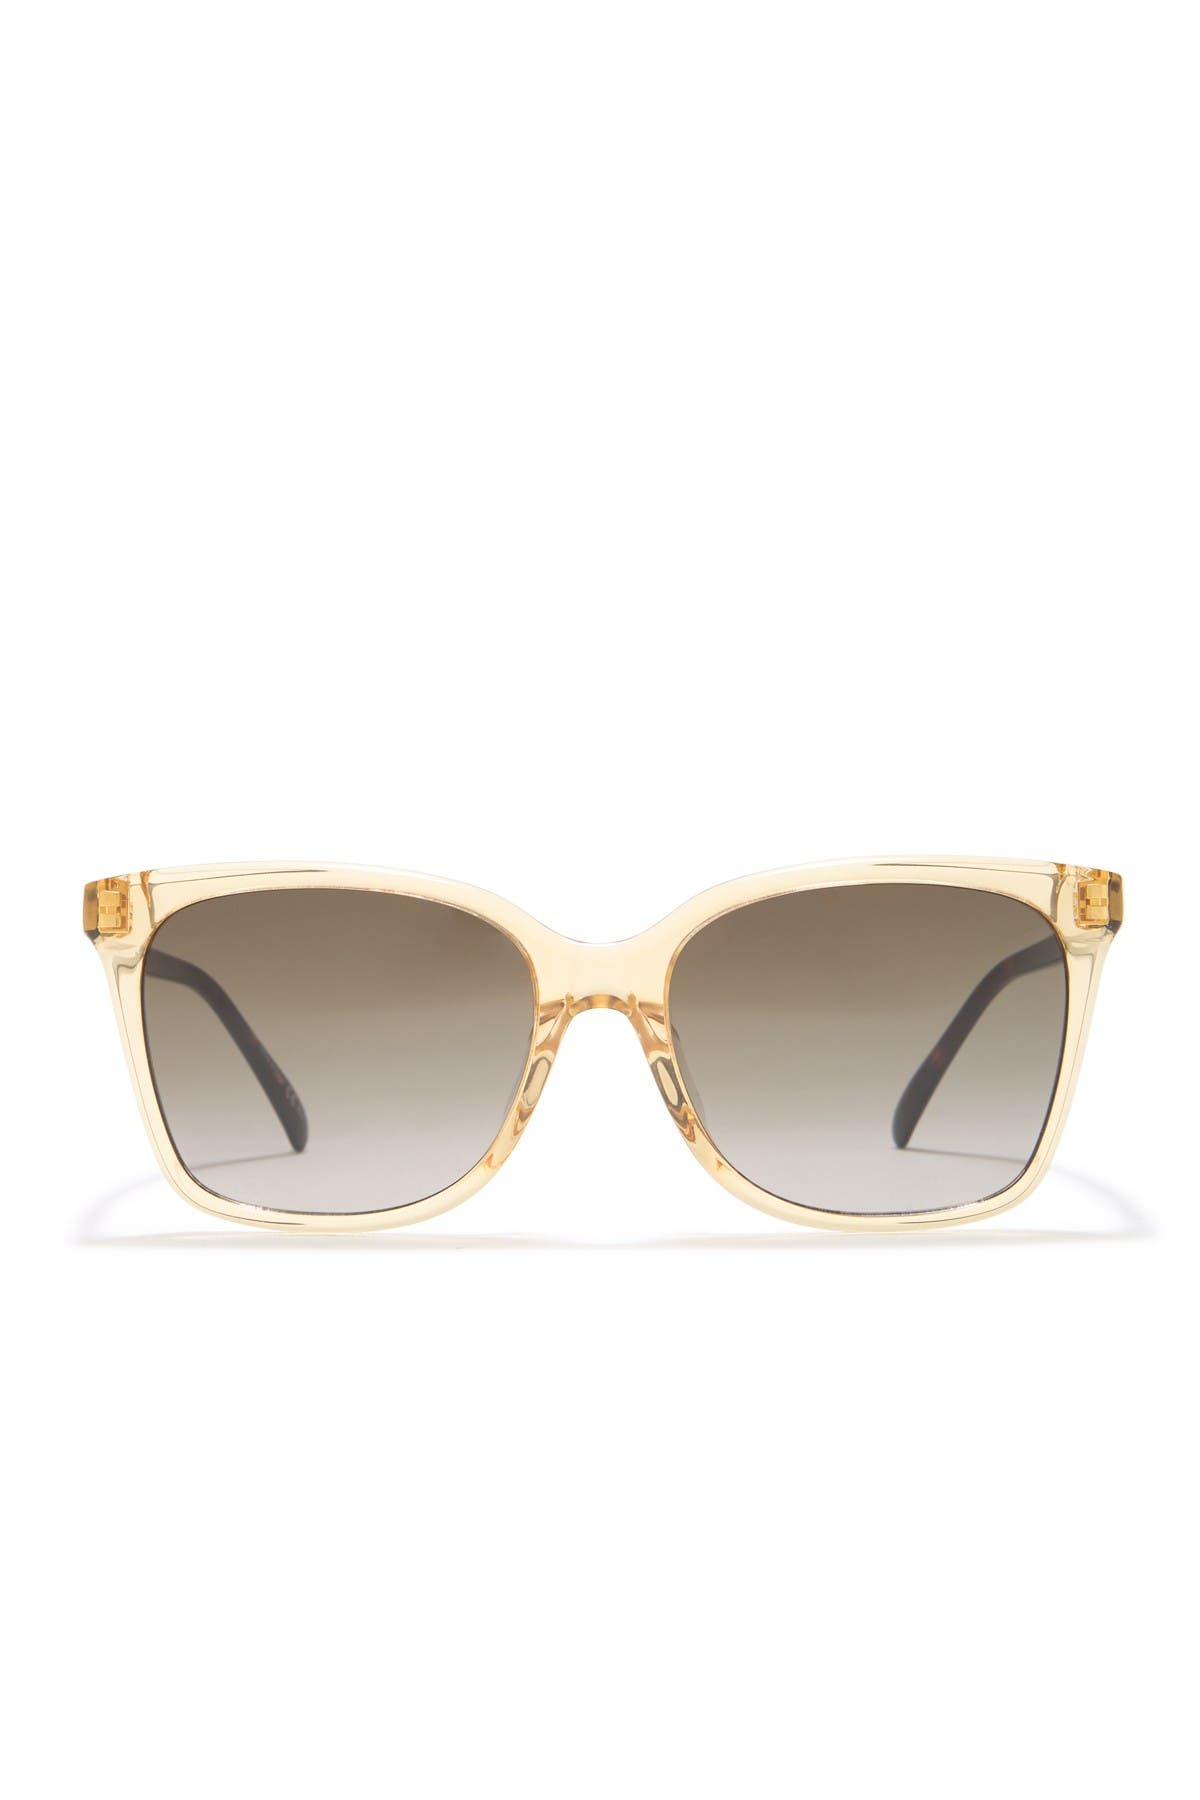 givenchy square sunglasses